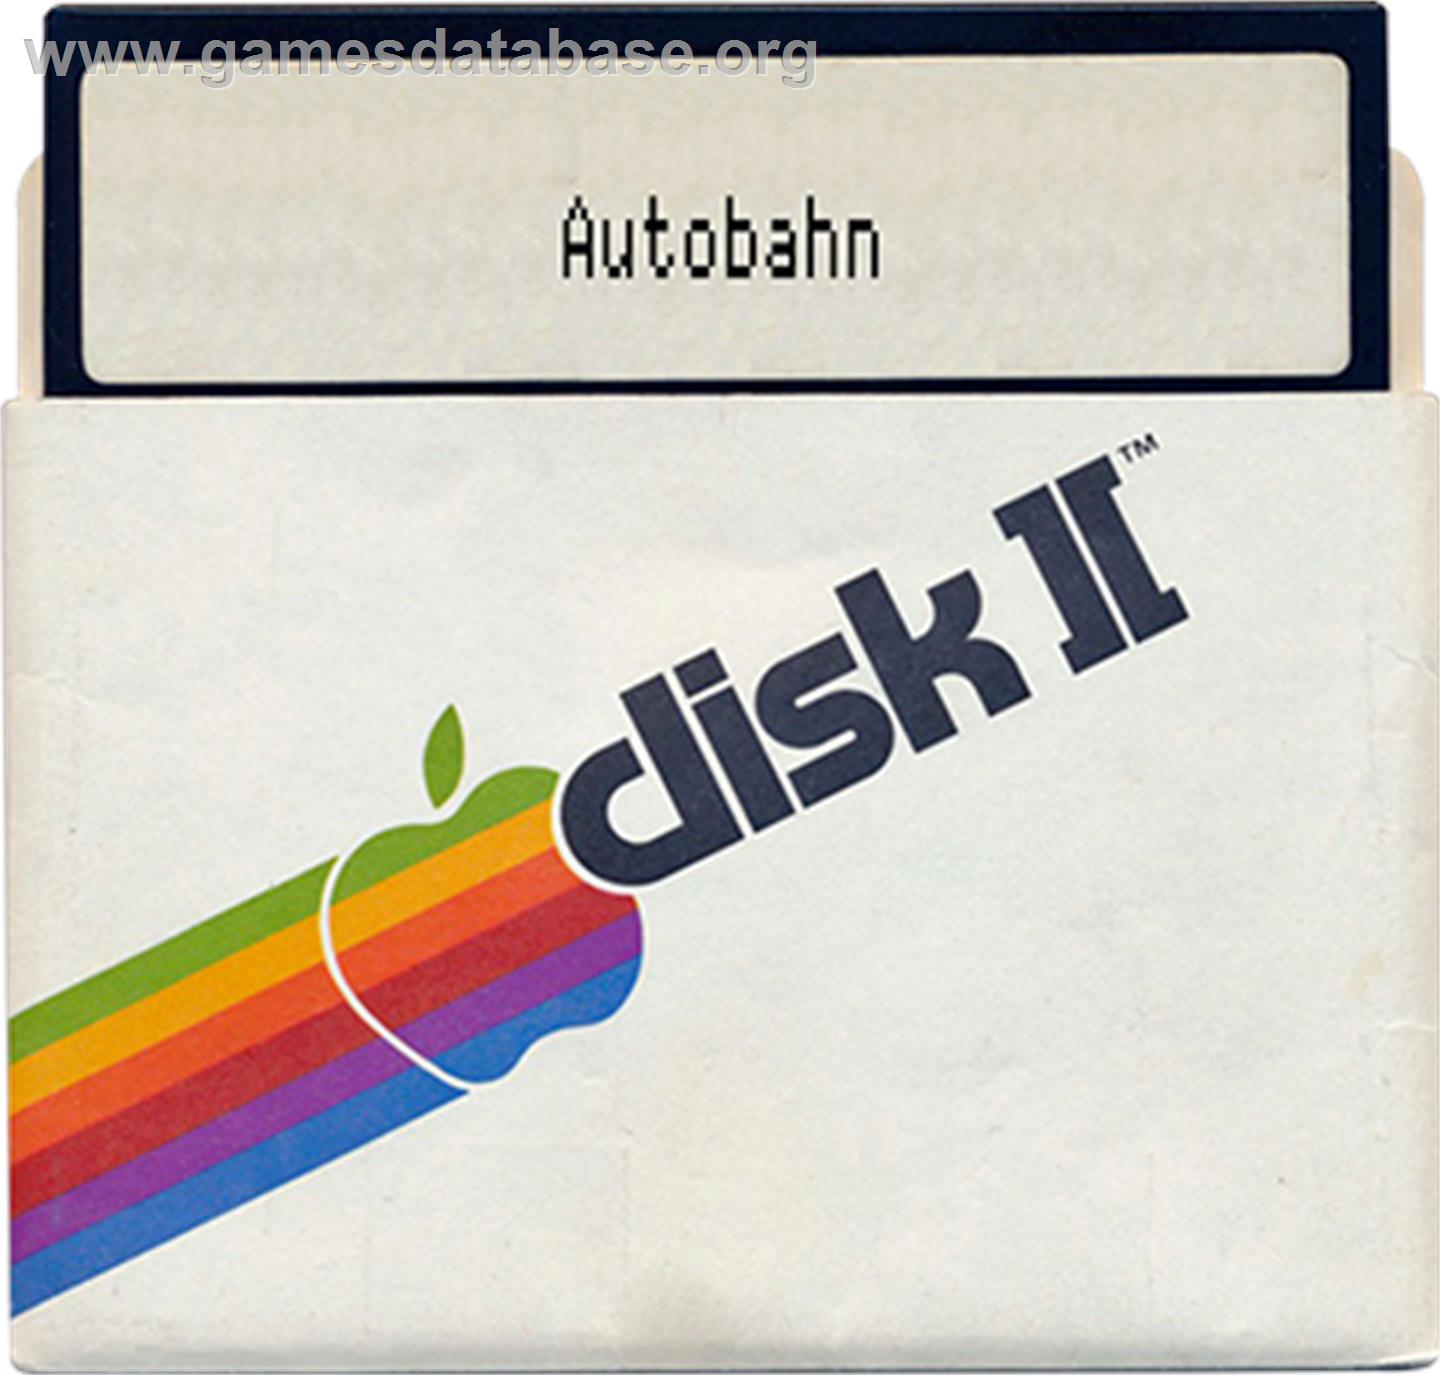 Autobahn - Apple II - Artwork - Disc